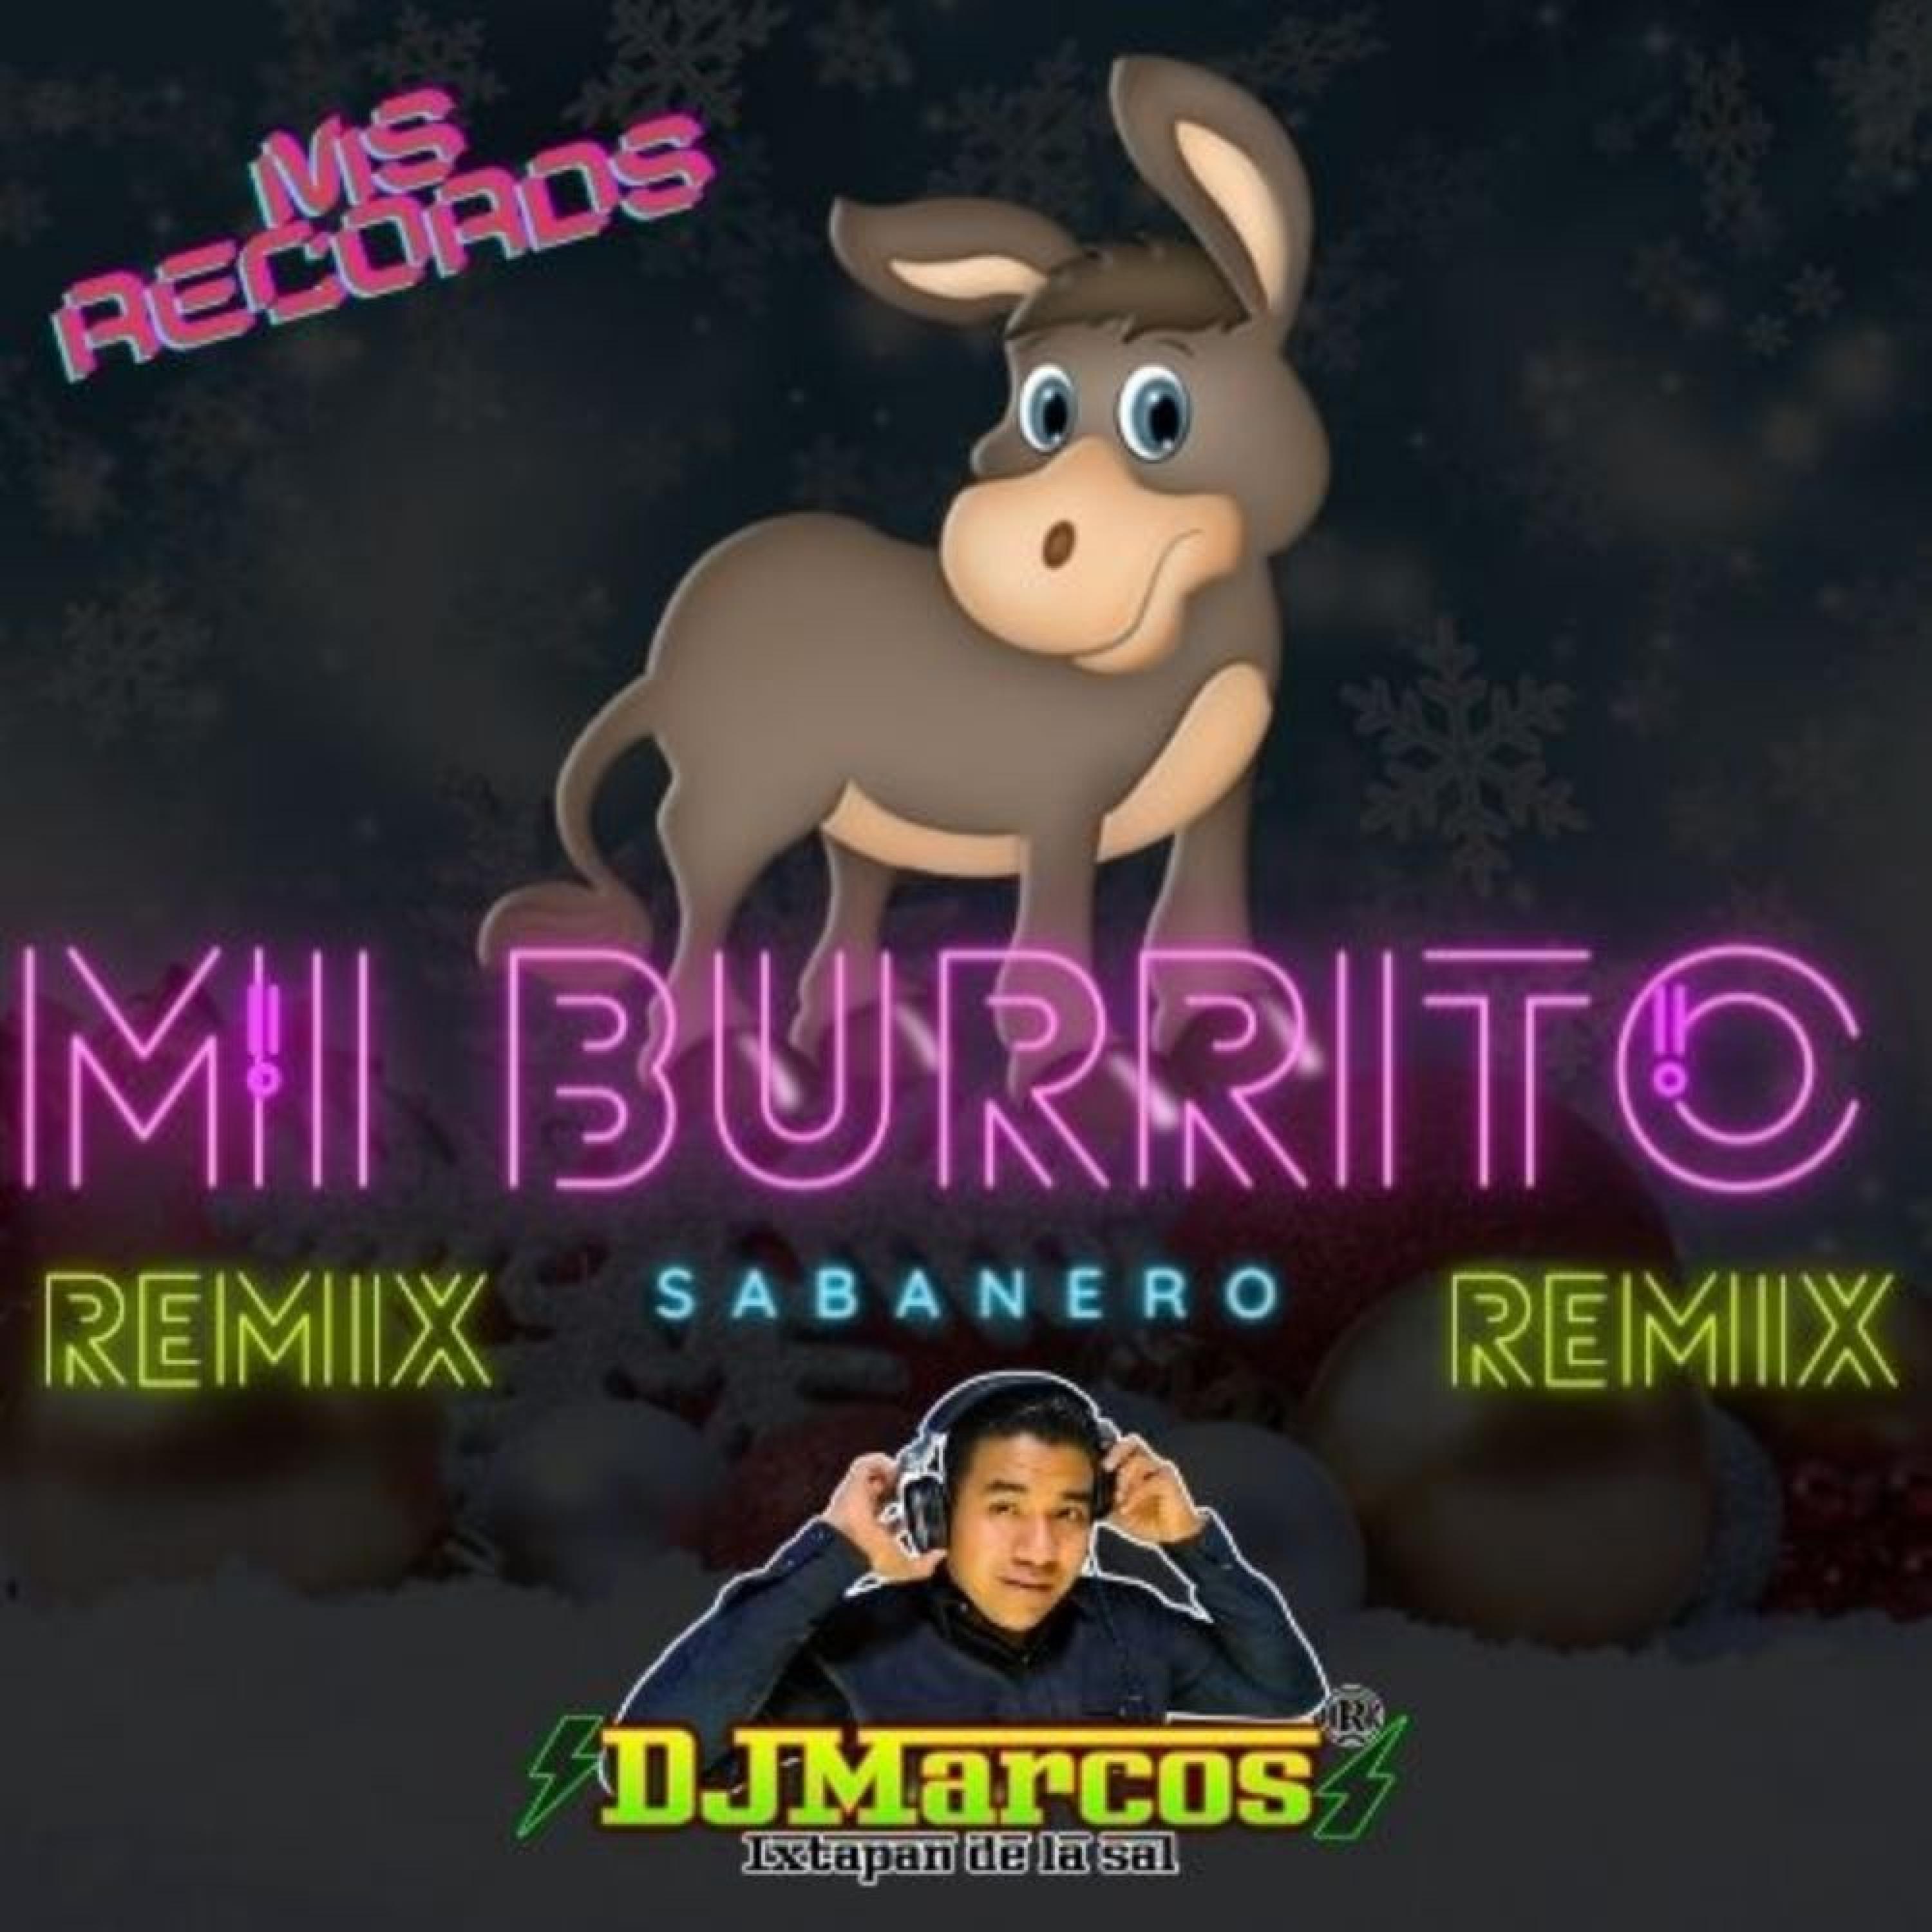 Mi burrito sabanero remix